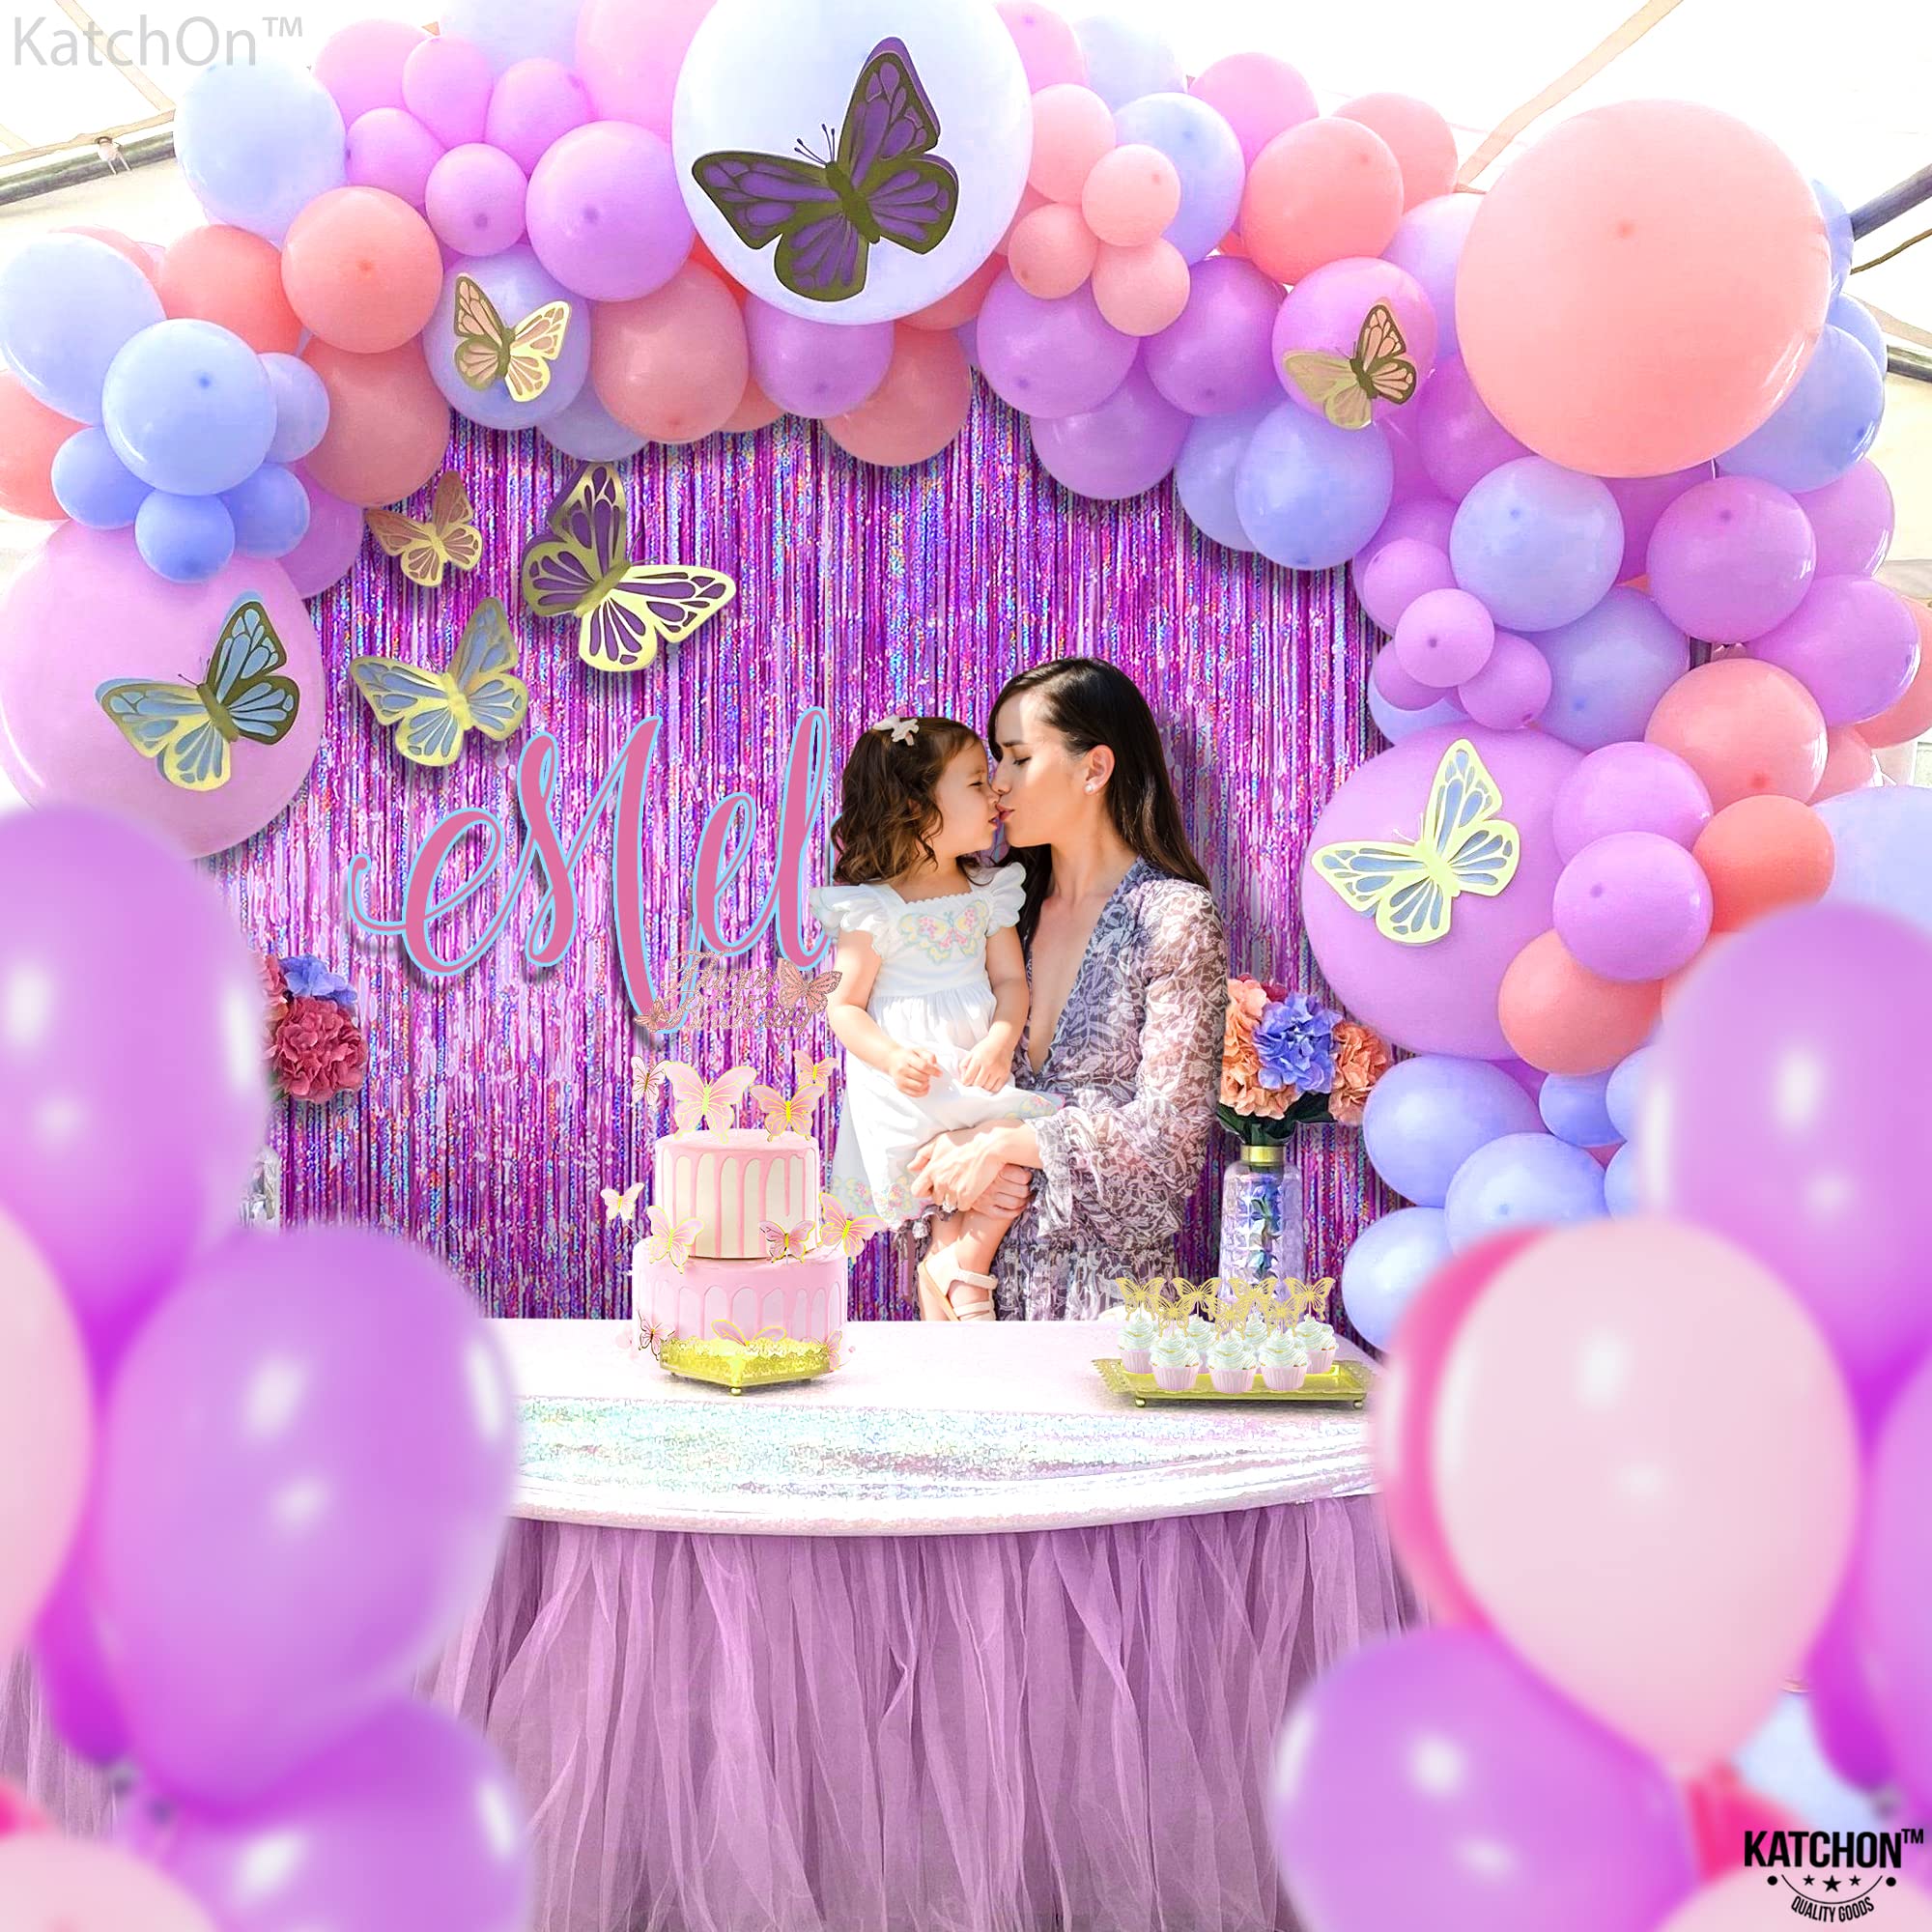 KatchOn, Iridescent Purple Fringe Curtain - 8x3.25 Feet, Pack of 2 | Purple Streamers for Mermaid Birthday Decorations | Purple Party Decorations | Valentine Decorations, Purple Birthday Decorations